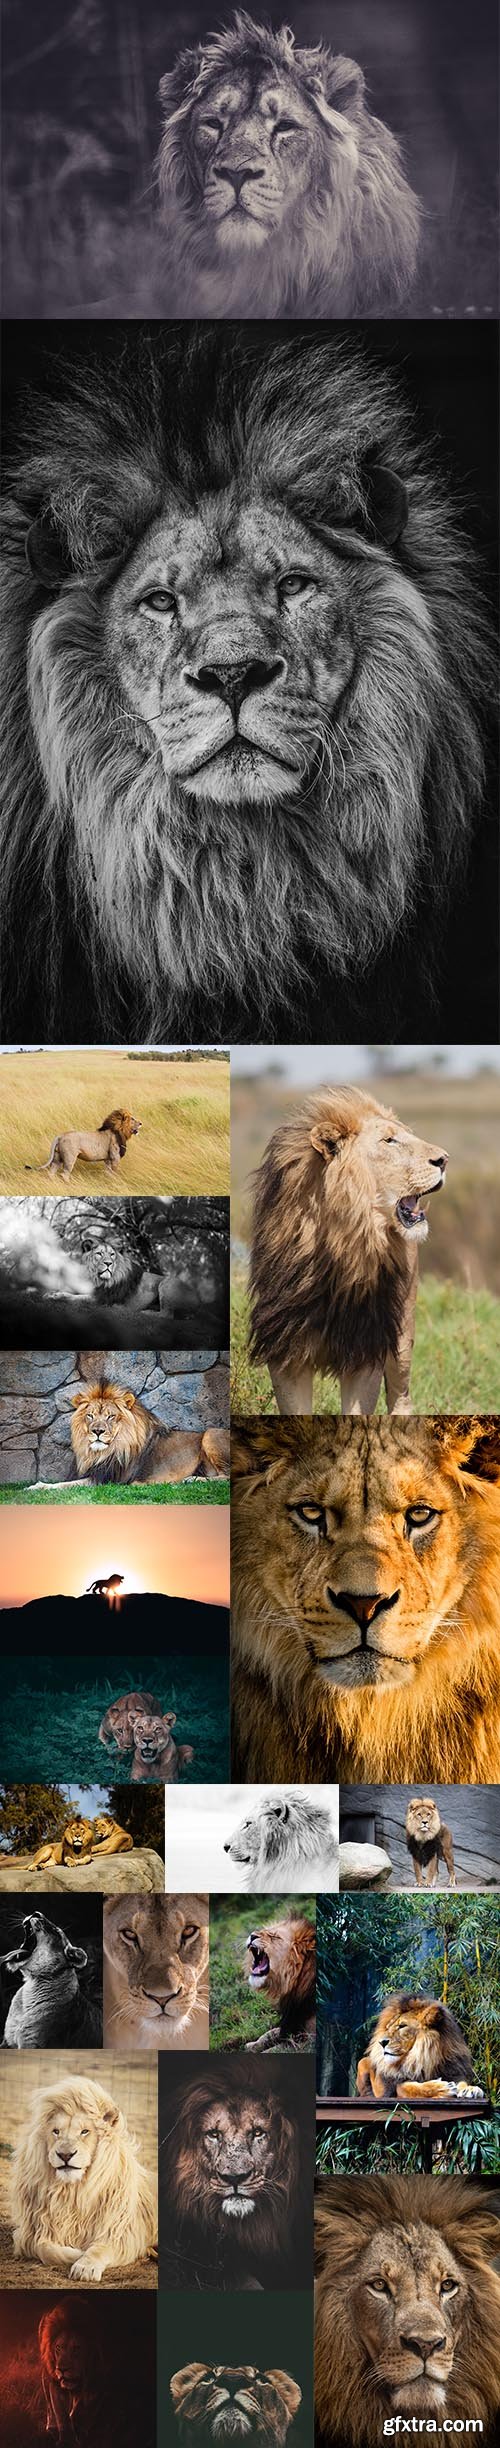 Lion - Premium UHQ JPEG Stock Photo Bundle